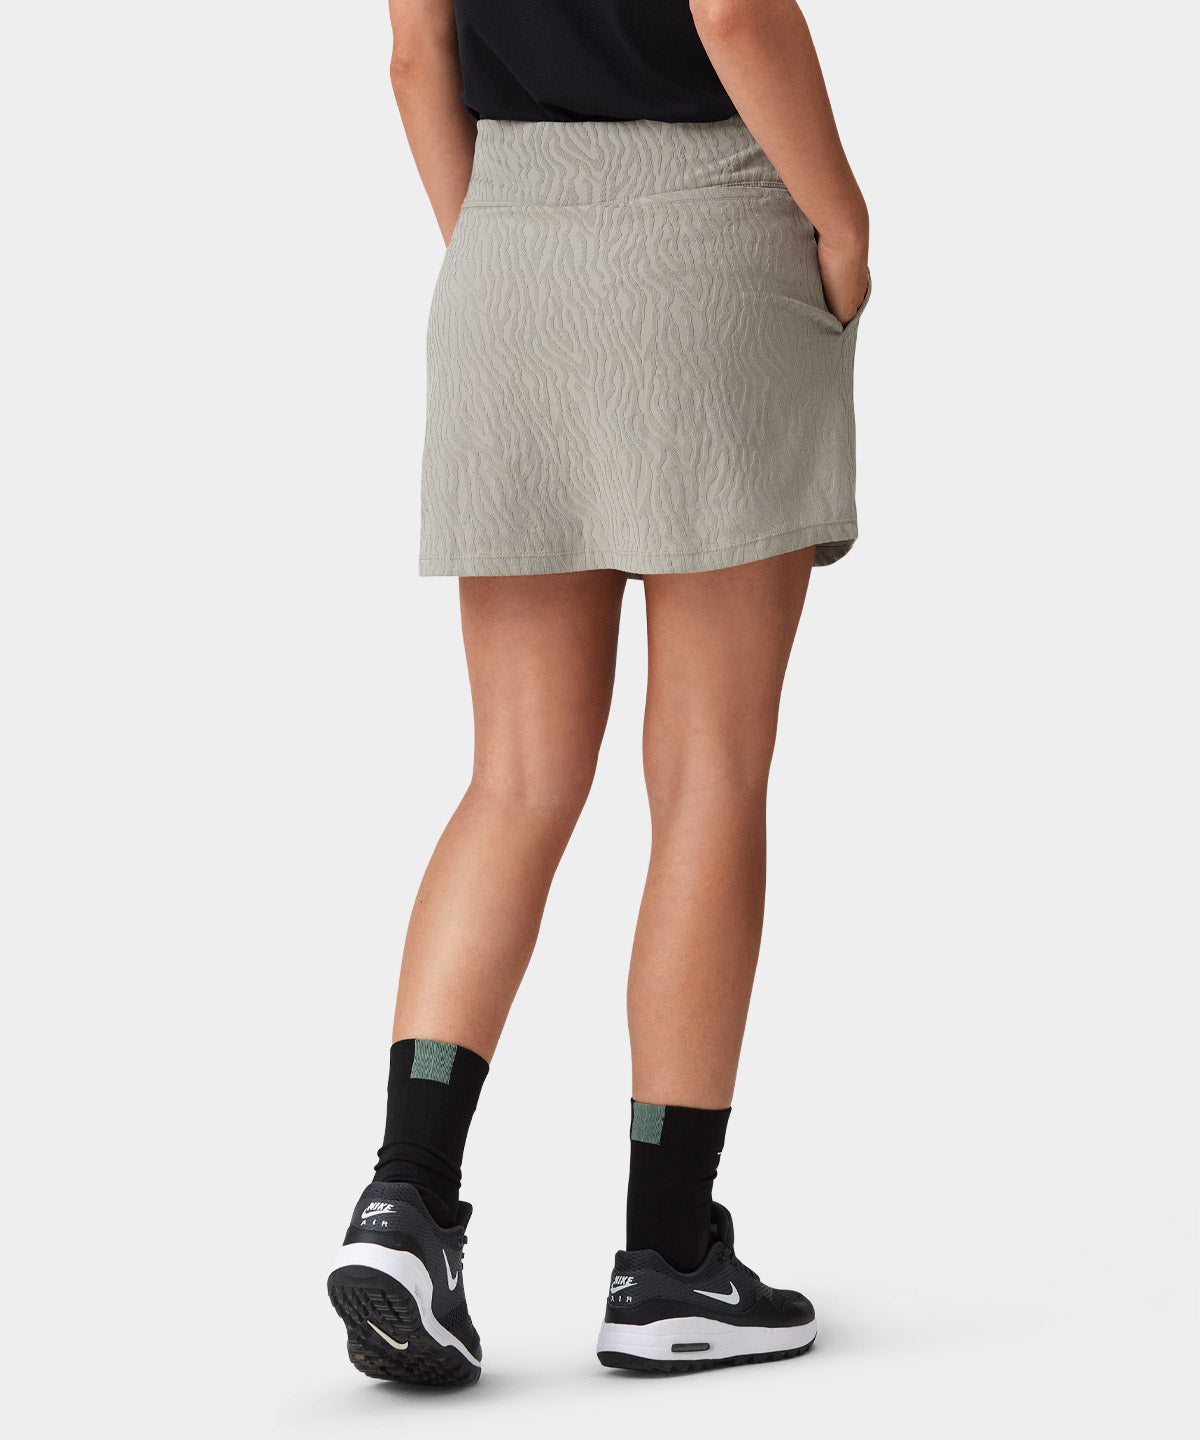 Rori Cedar Performance Skirt